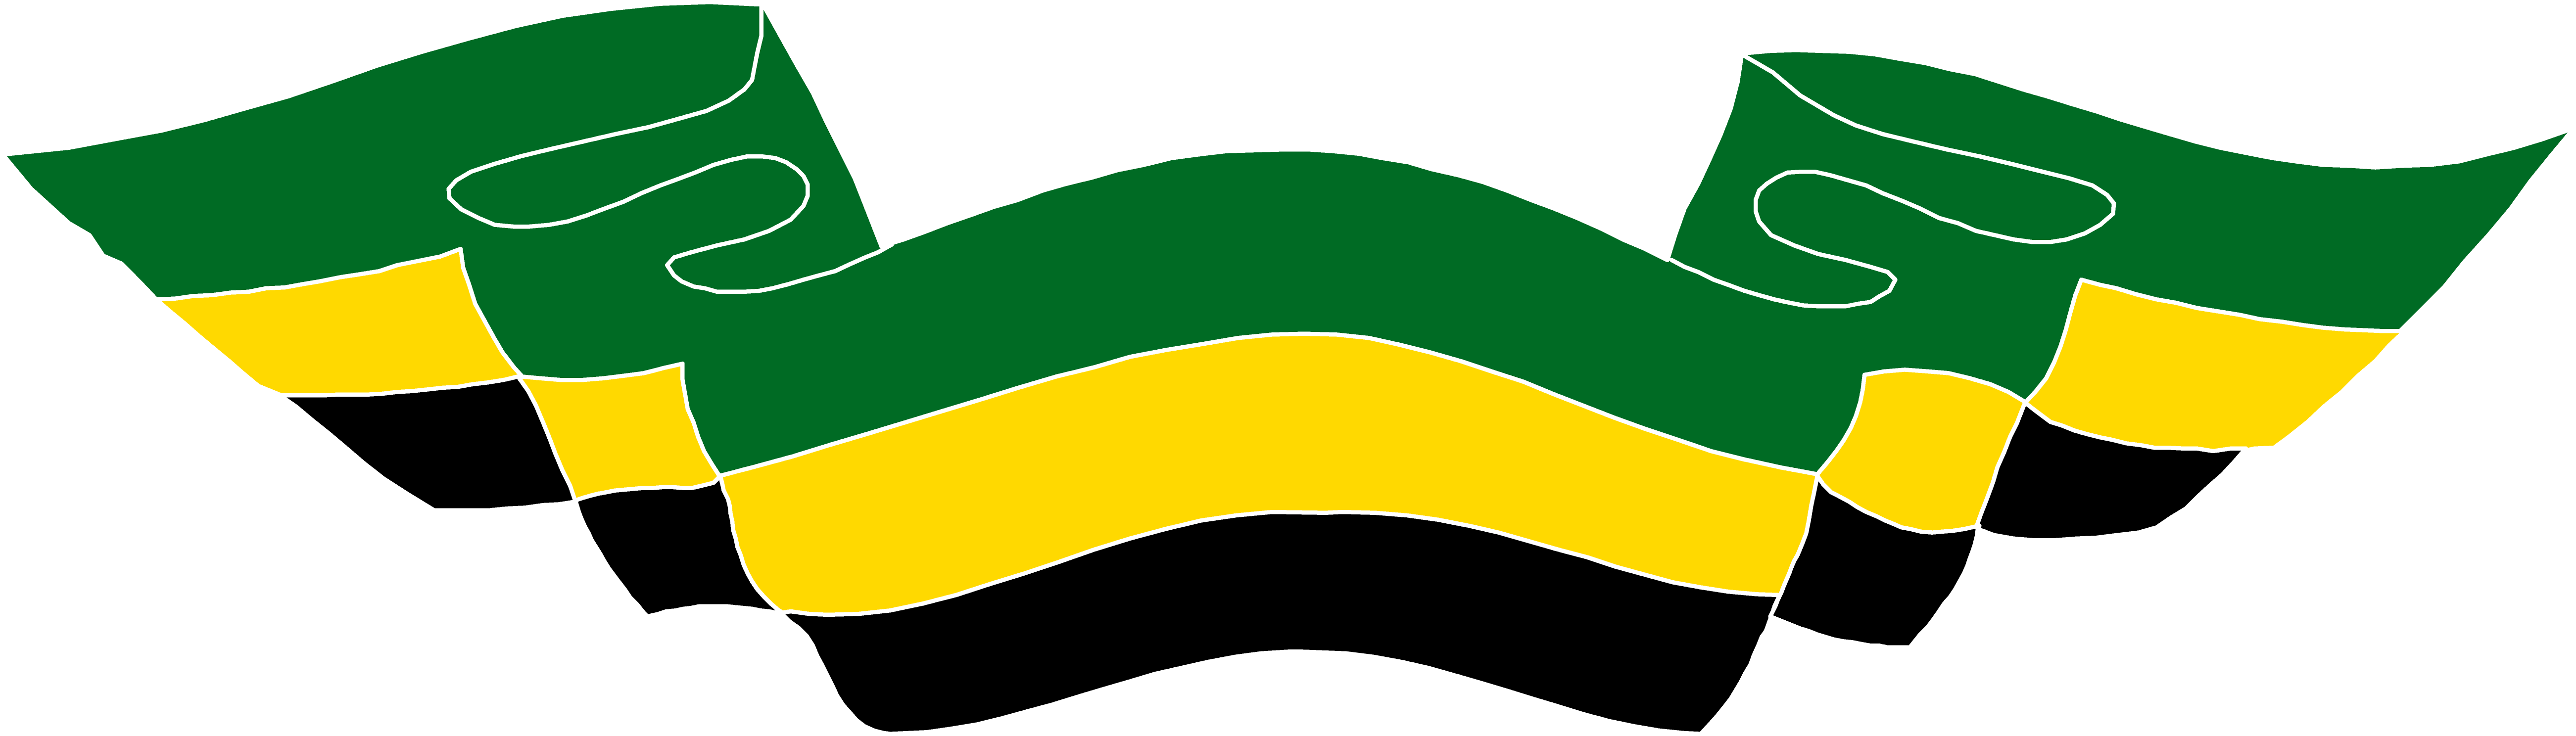 Jamaica Flag PNG Transparent Image